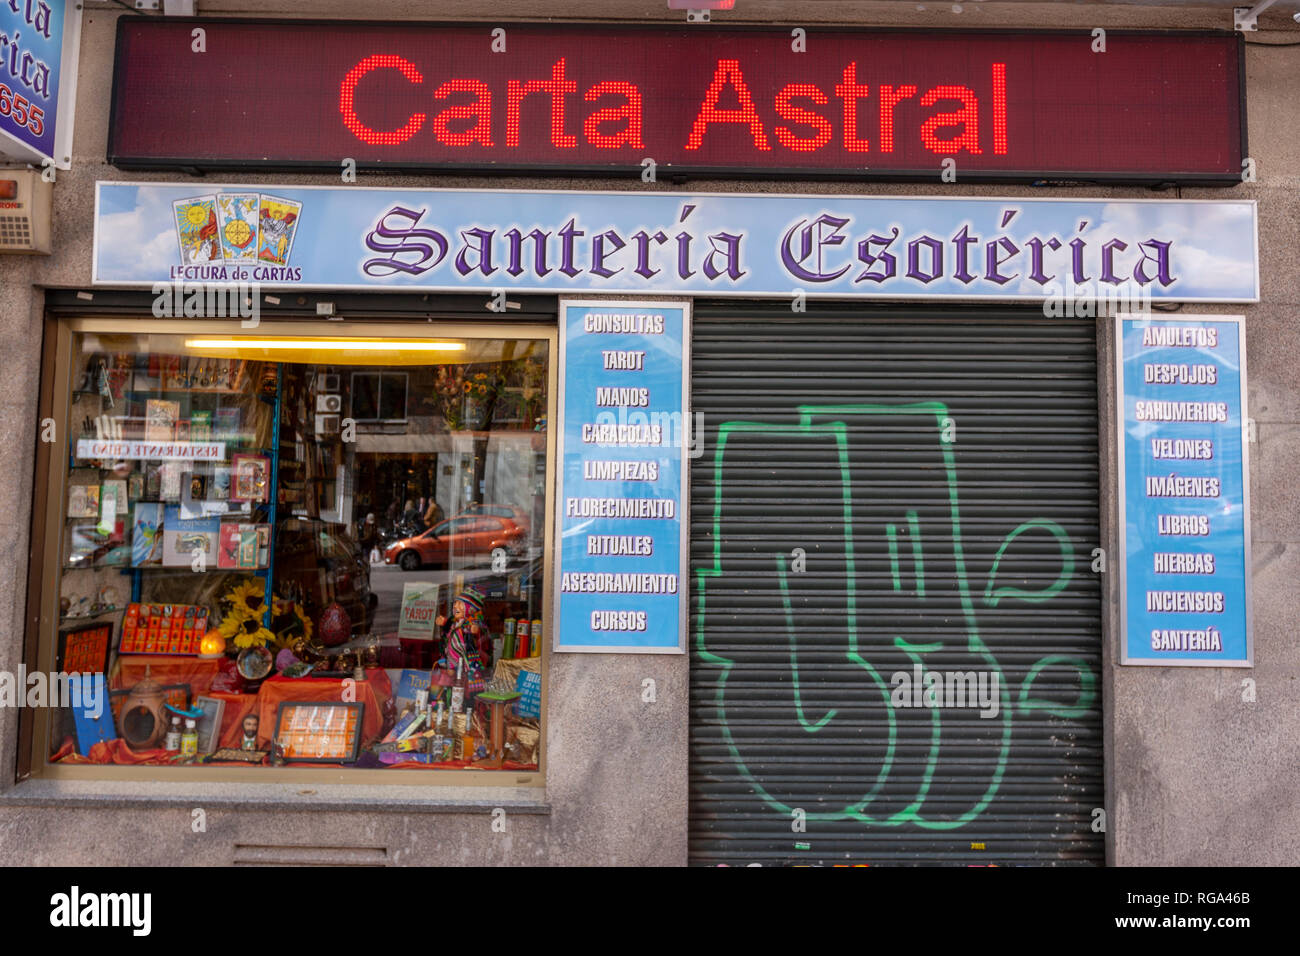 Santeria esoterica Shop in der traditionellen Straße Calle Bravo Murillo, Madrid, Spanien Stockfoto